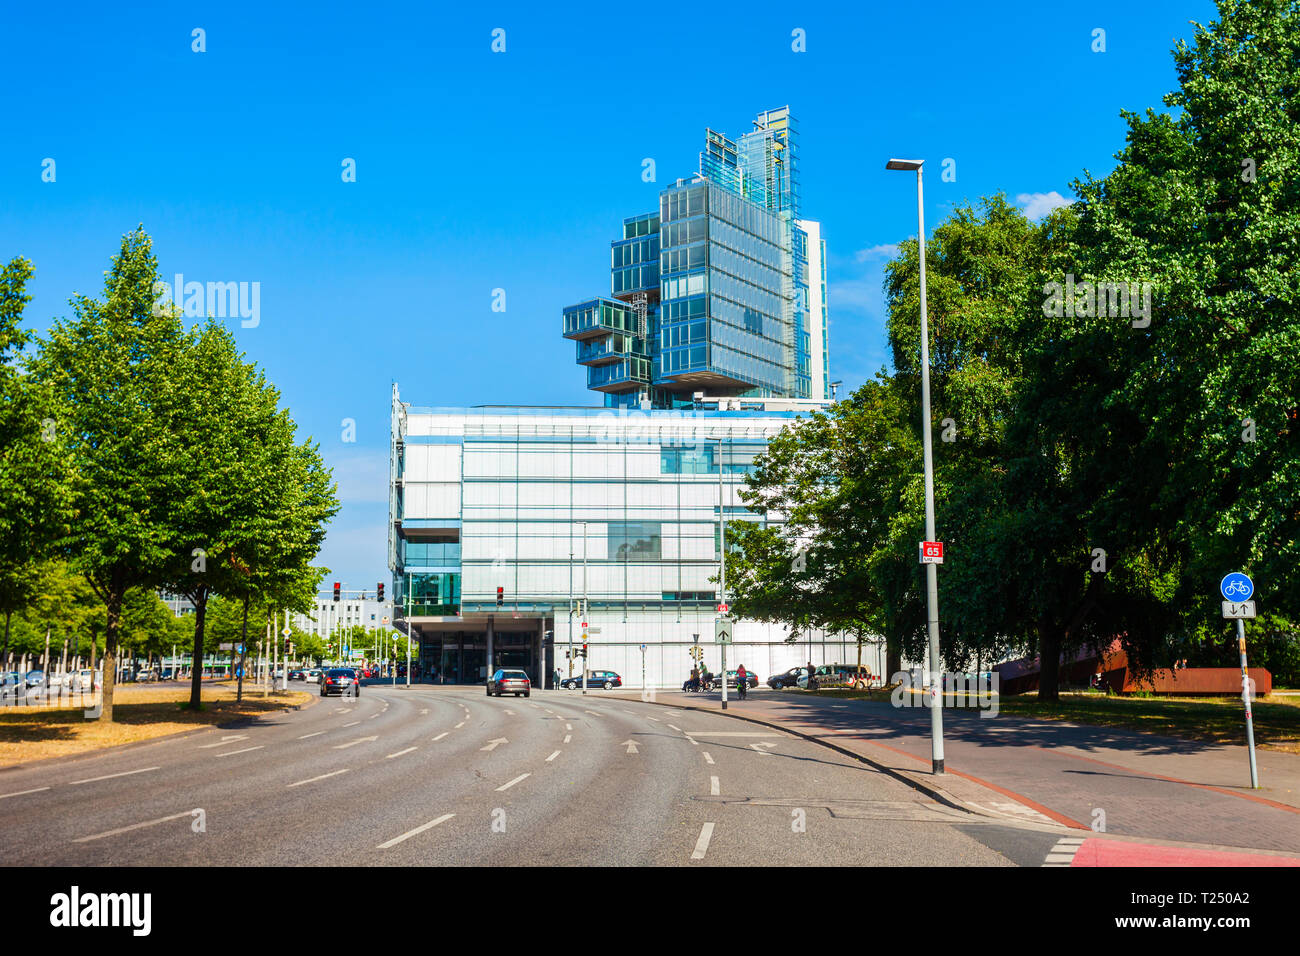 HANNOVER, GERMANY - JULY 05, 2018: North German Landesbank or Norddeutsche Landesbank Girozentrale in Hannover, Germany Stock Photo